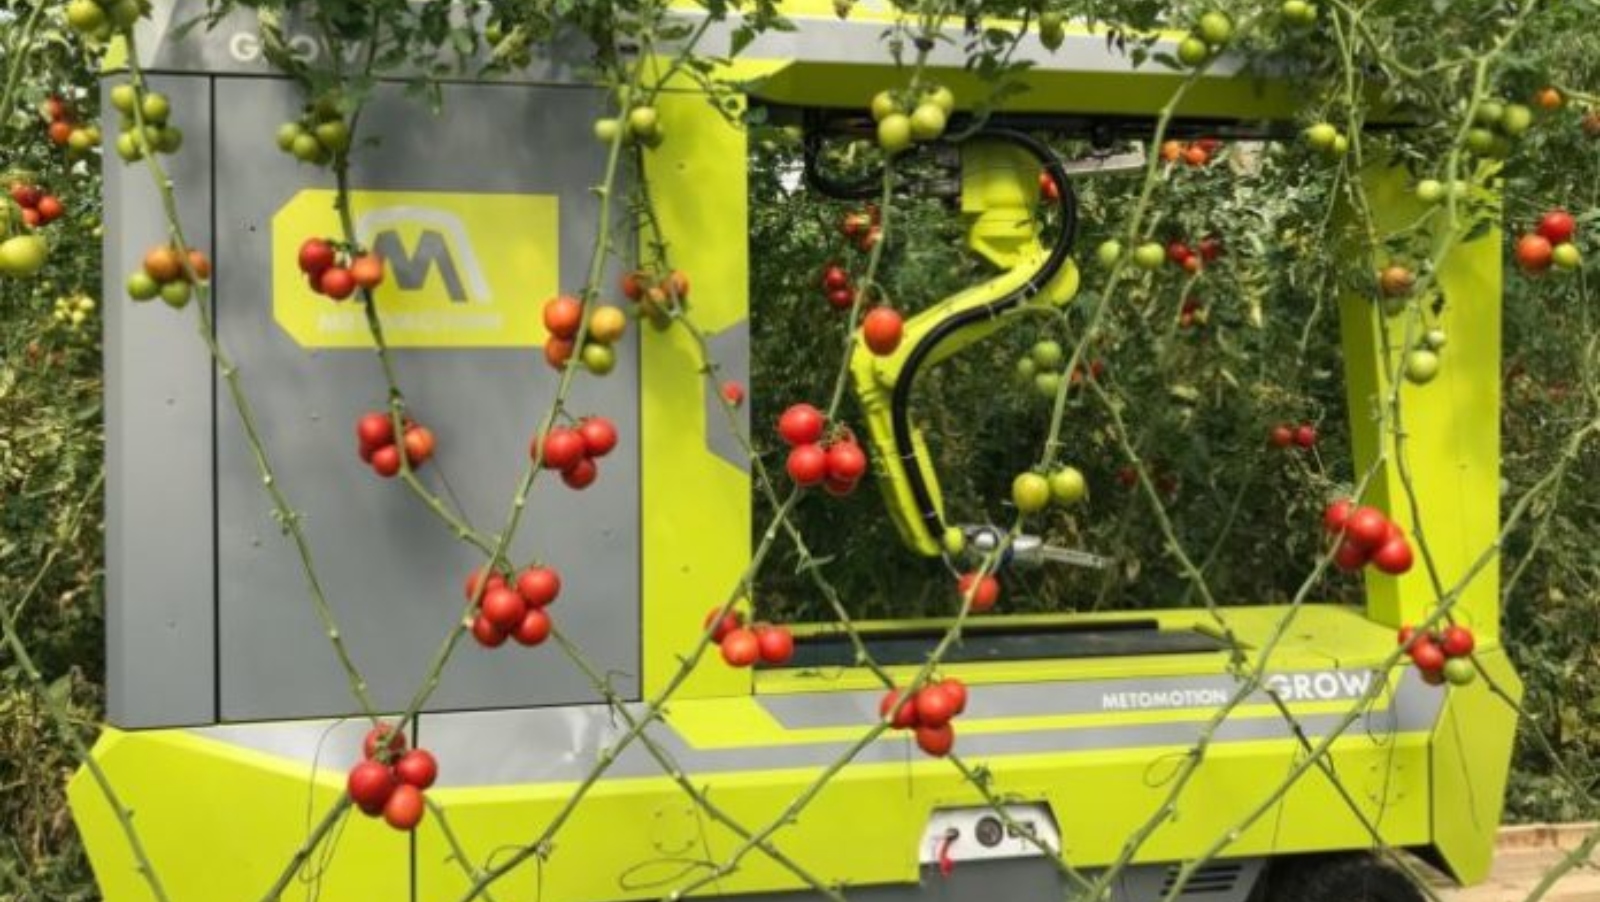 MetoMotion’s robotic tomato harvester. Photo courtesy of Trendlines